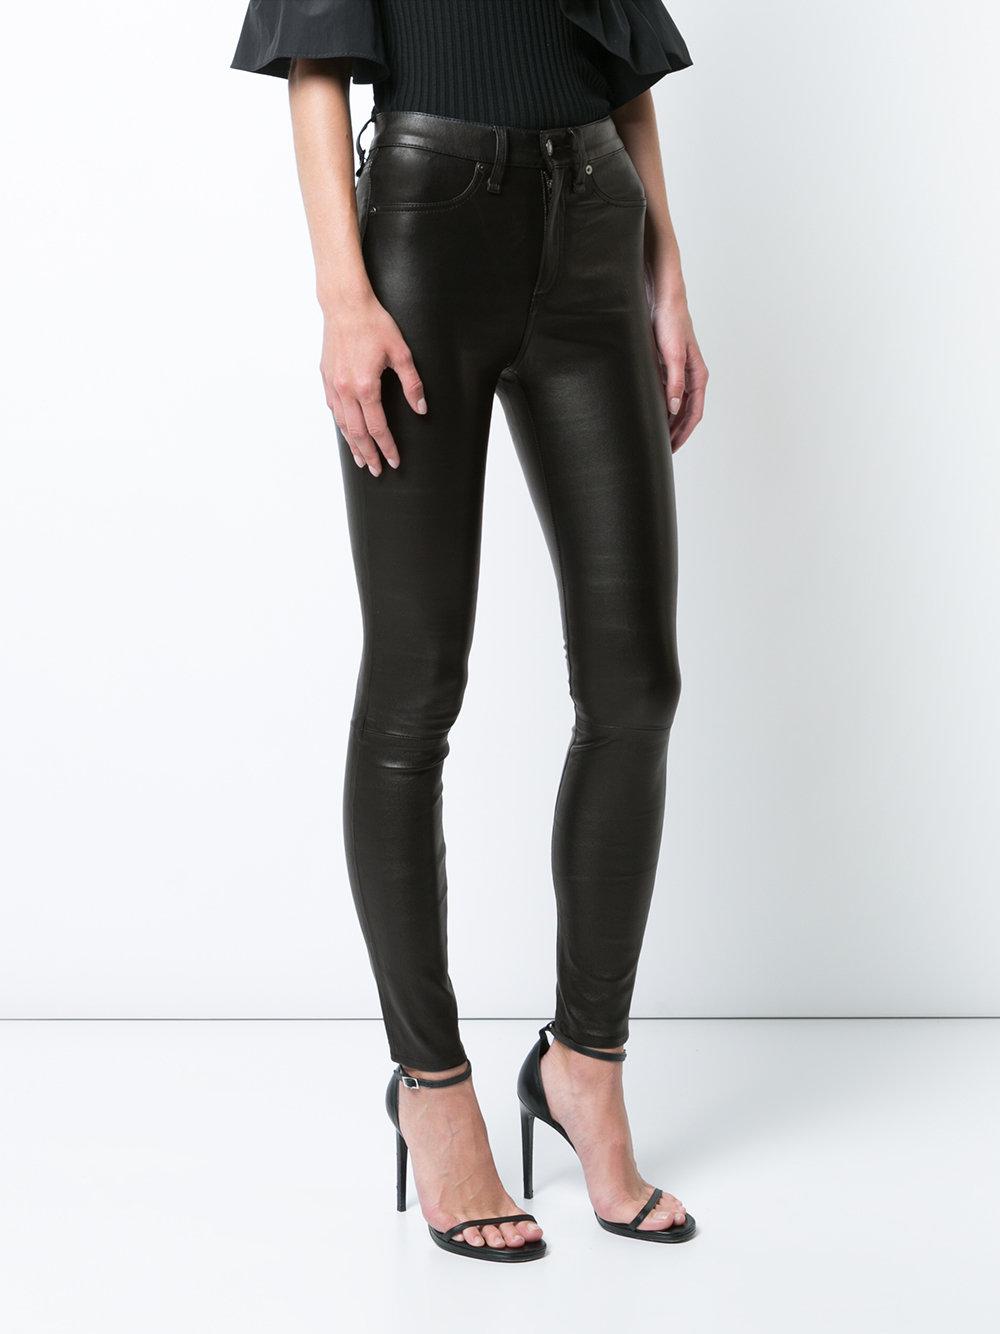 Lyst - Veronica Beard Kate Trousers in Black